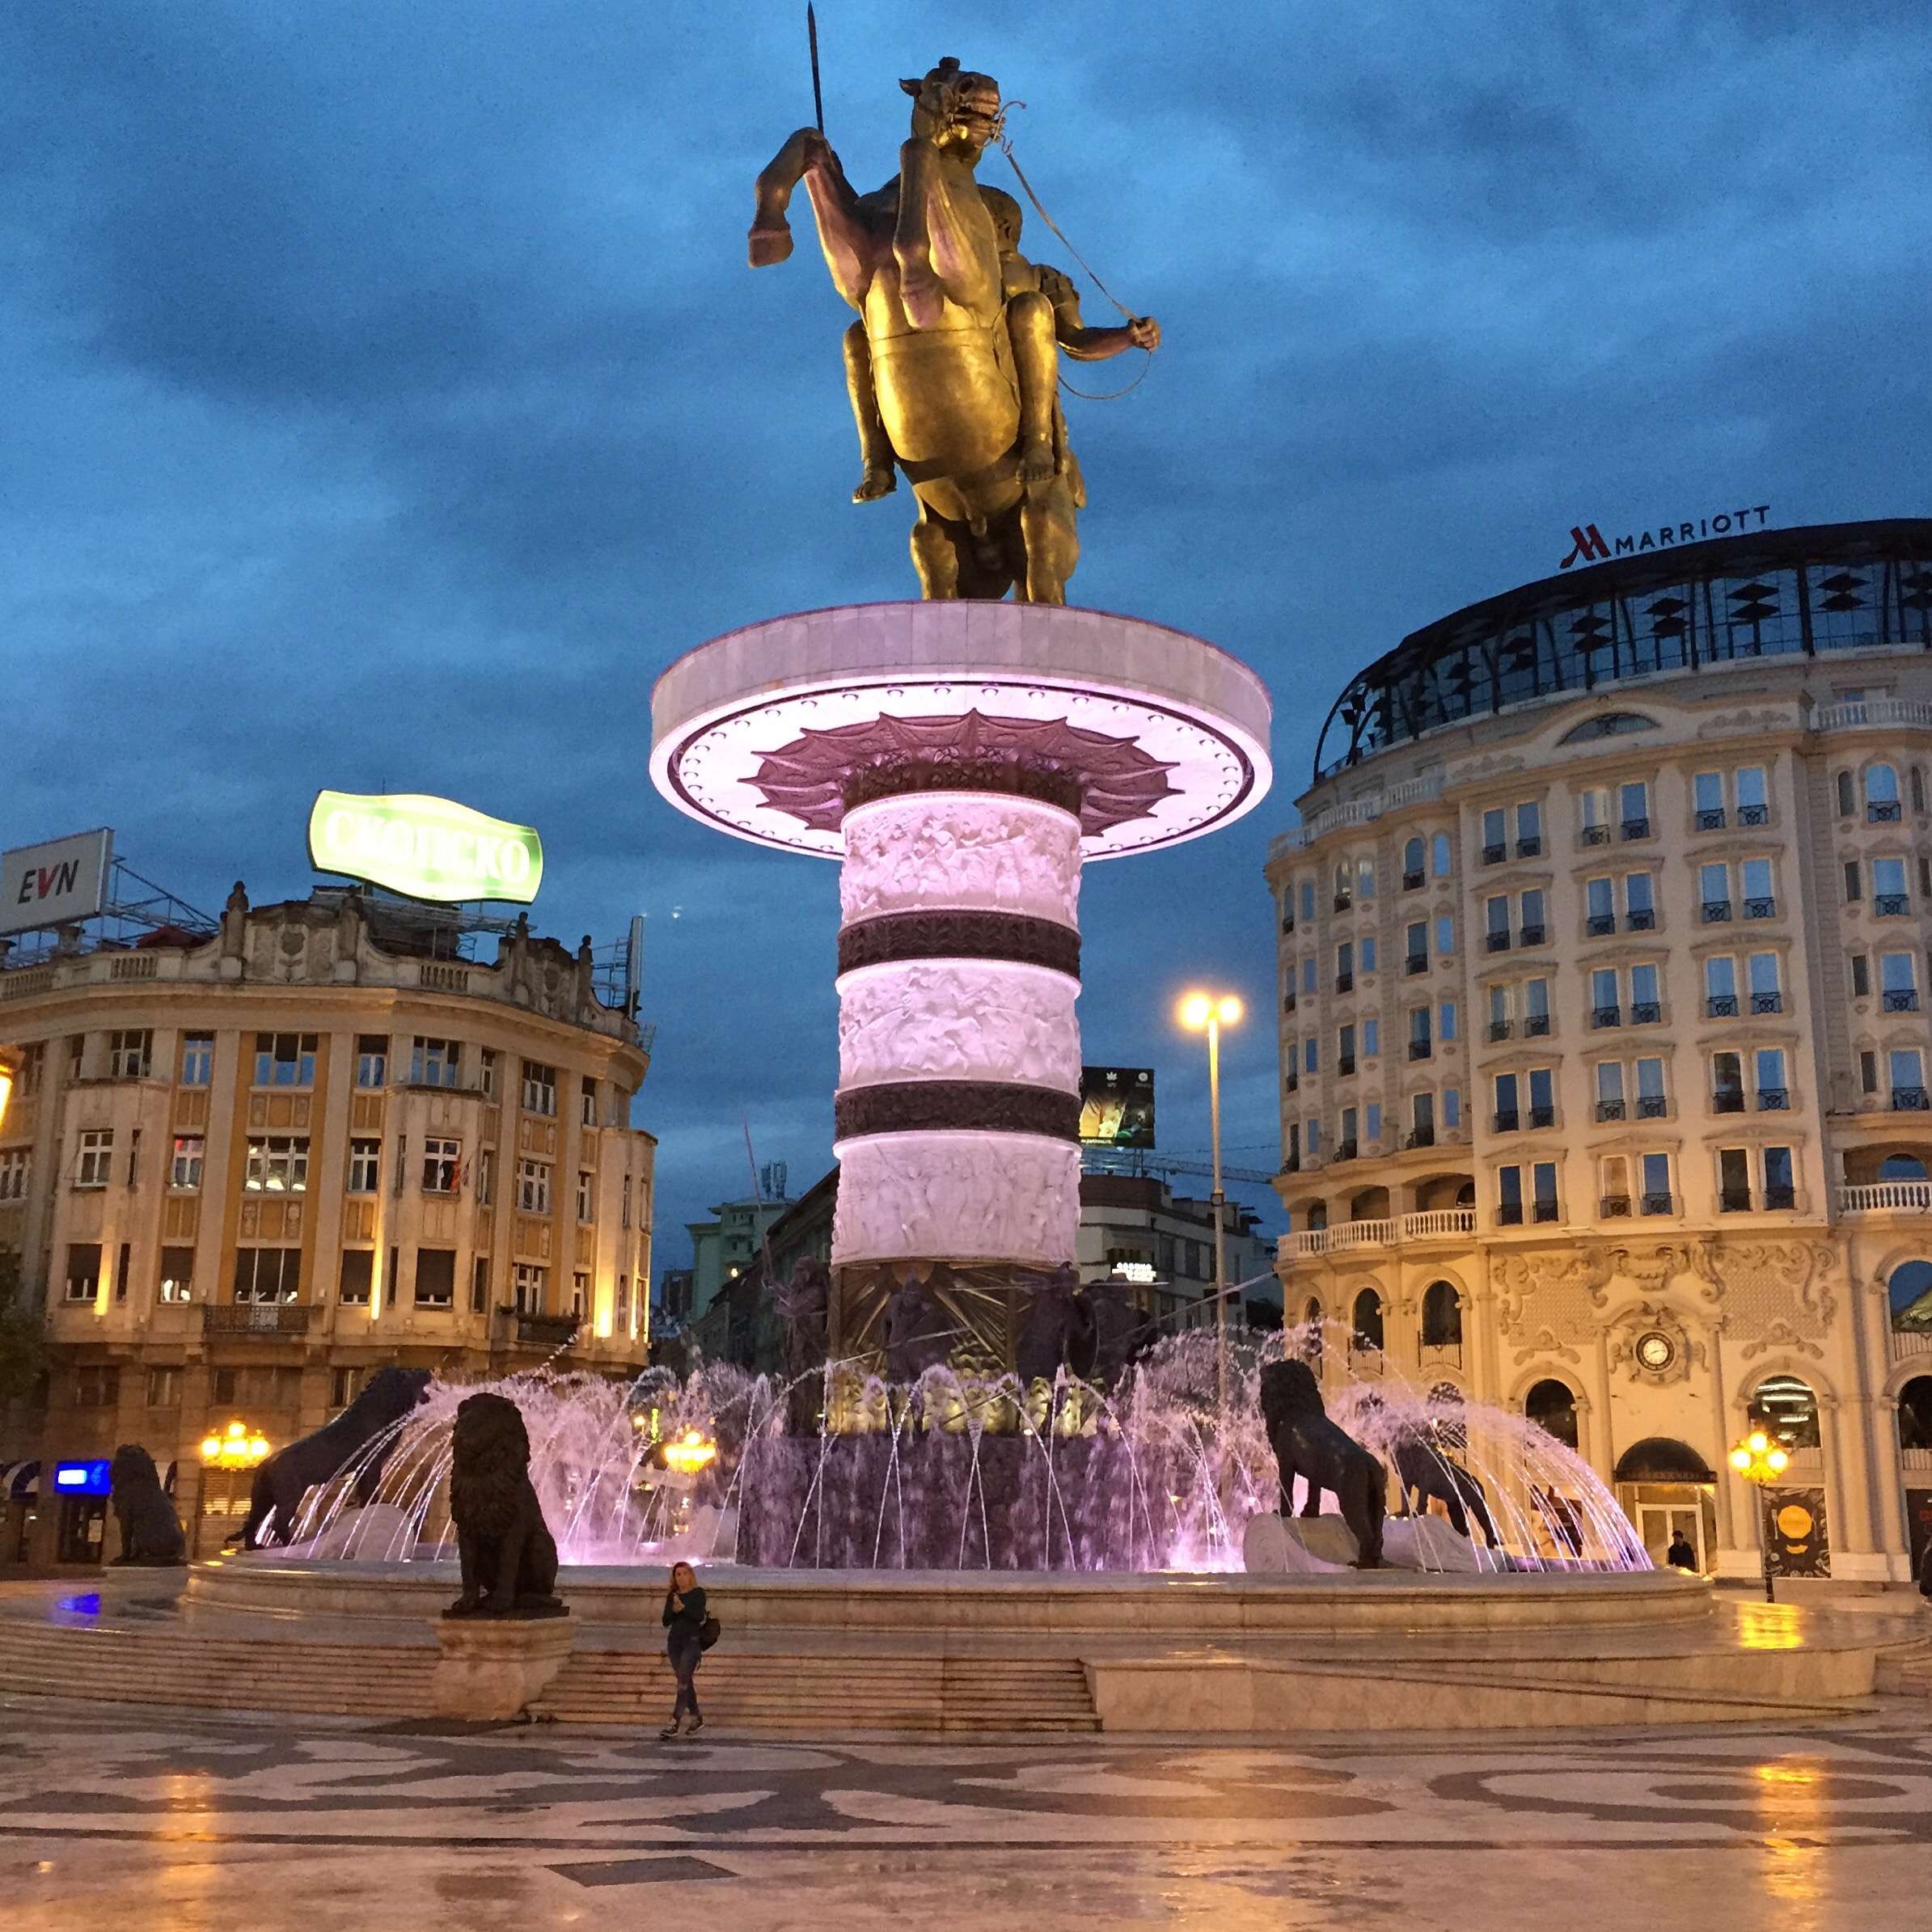 Diario de Viaje Los Balcanes - Julio 2017 - Blogs de Europa Oriental - DIA 2 - MACEDONIA - Skopje (5)